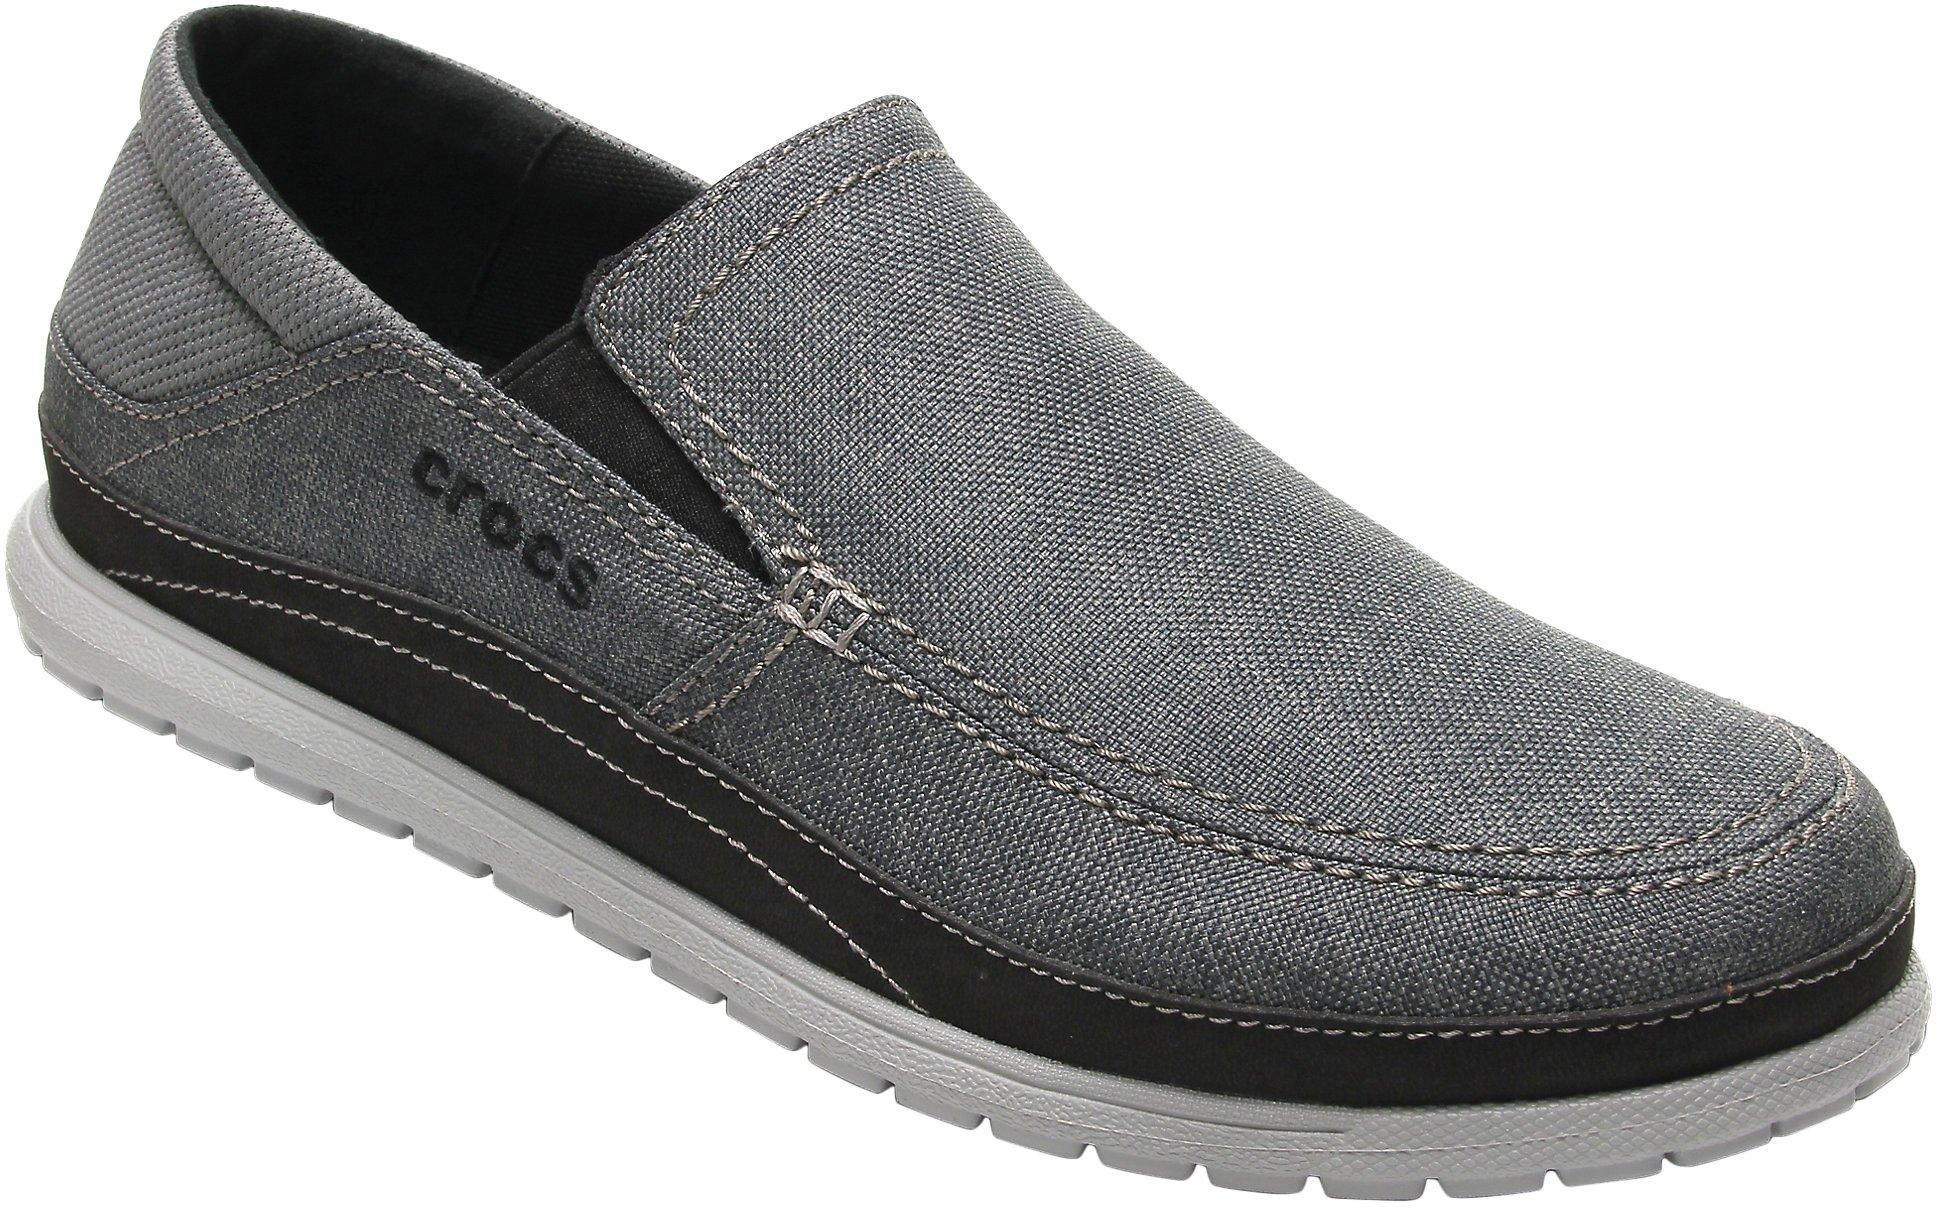 crocs loafers black